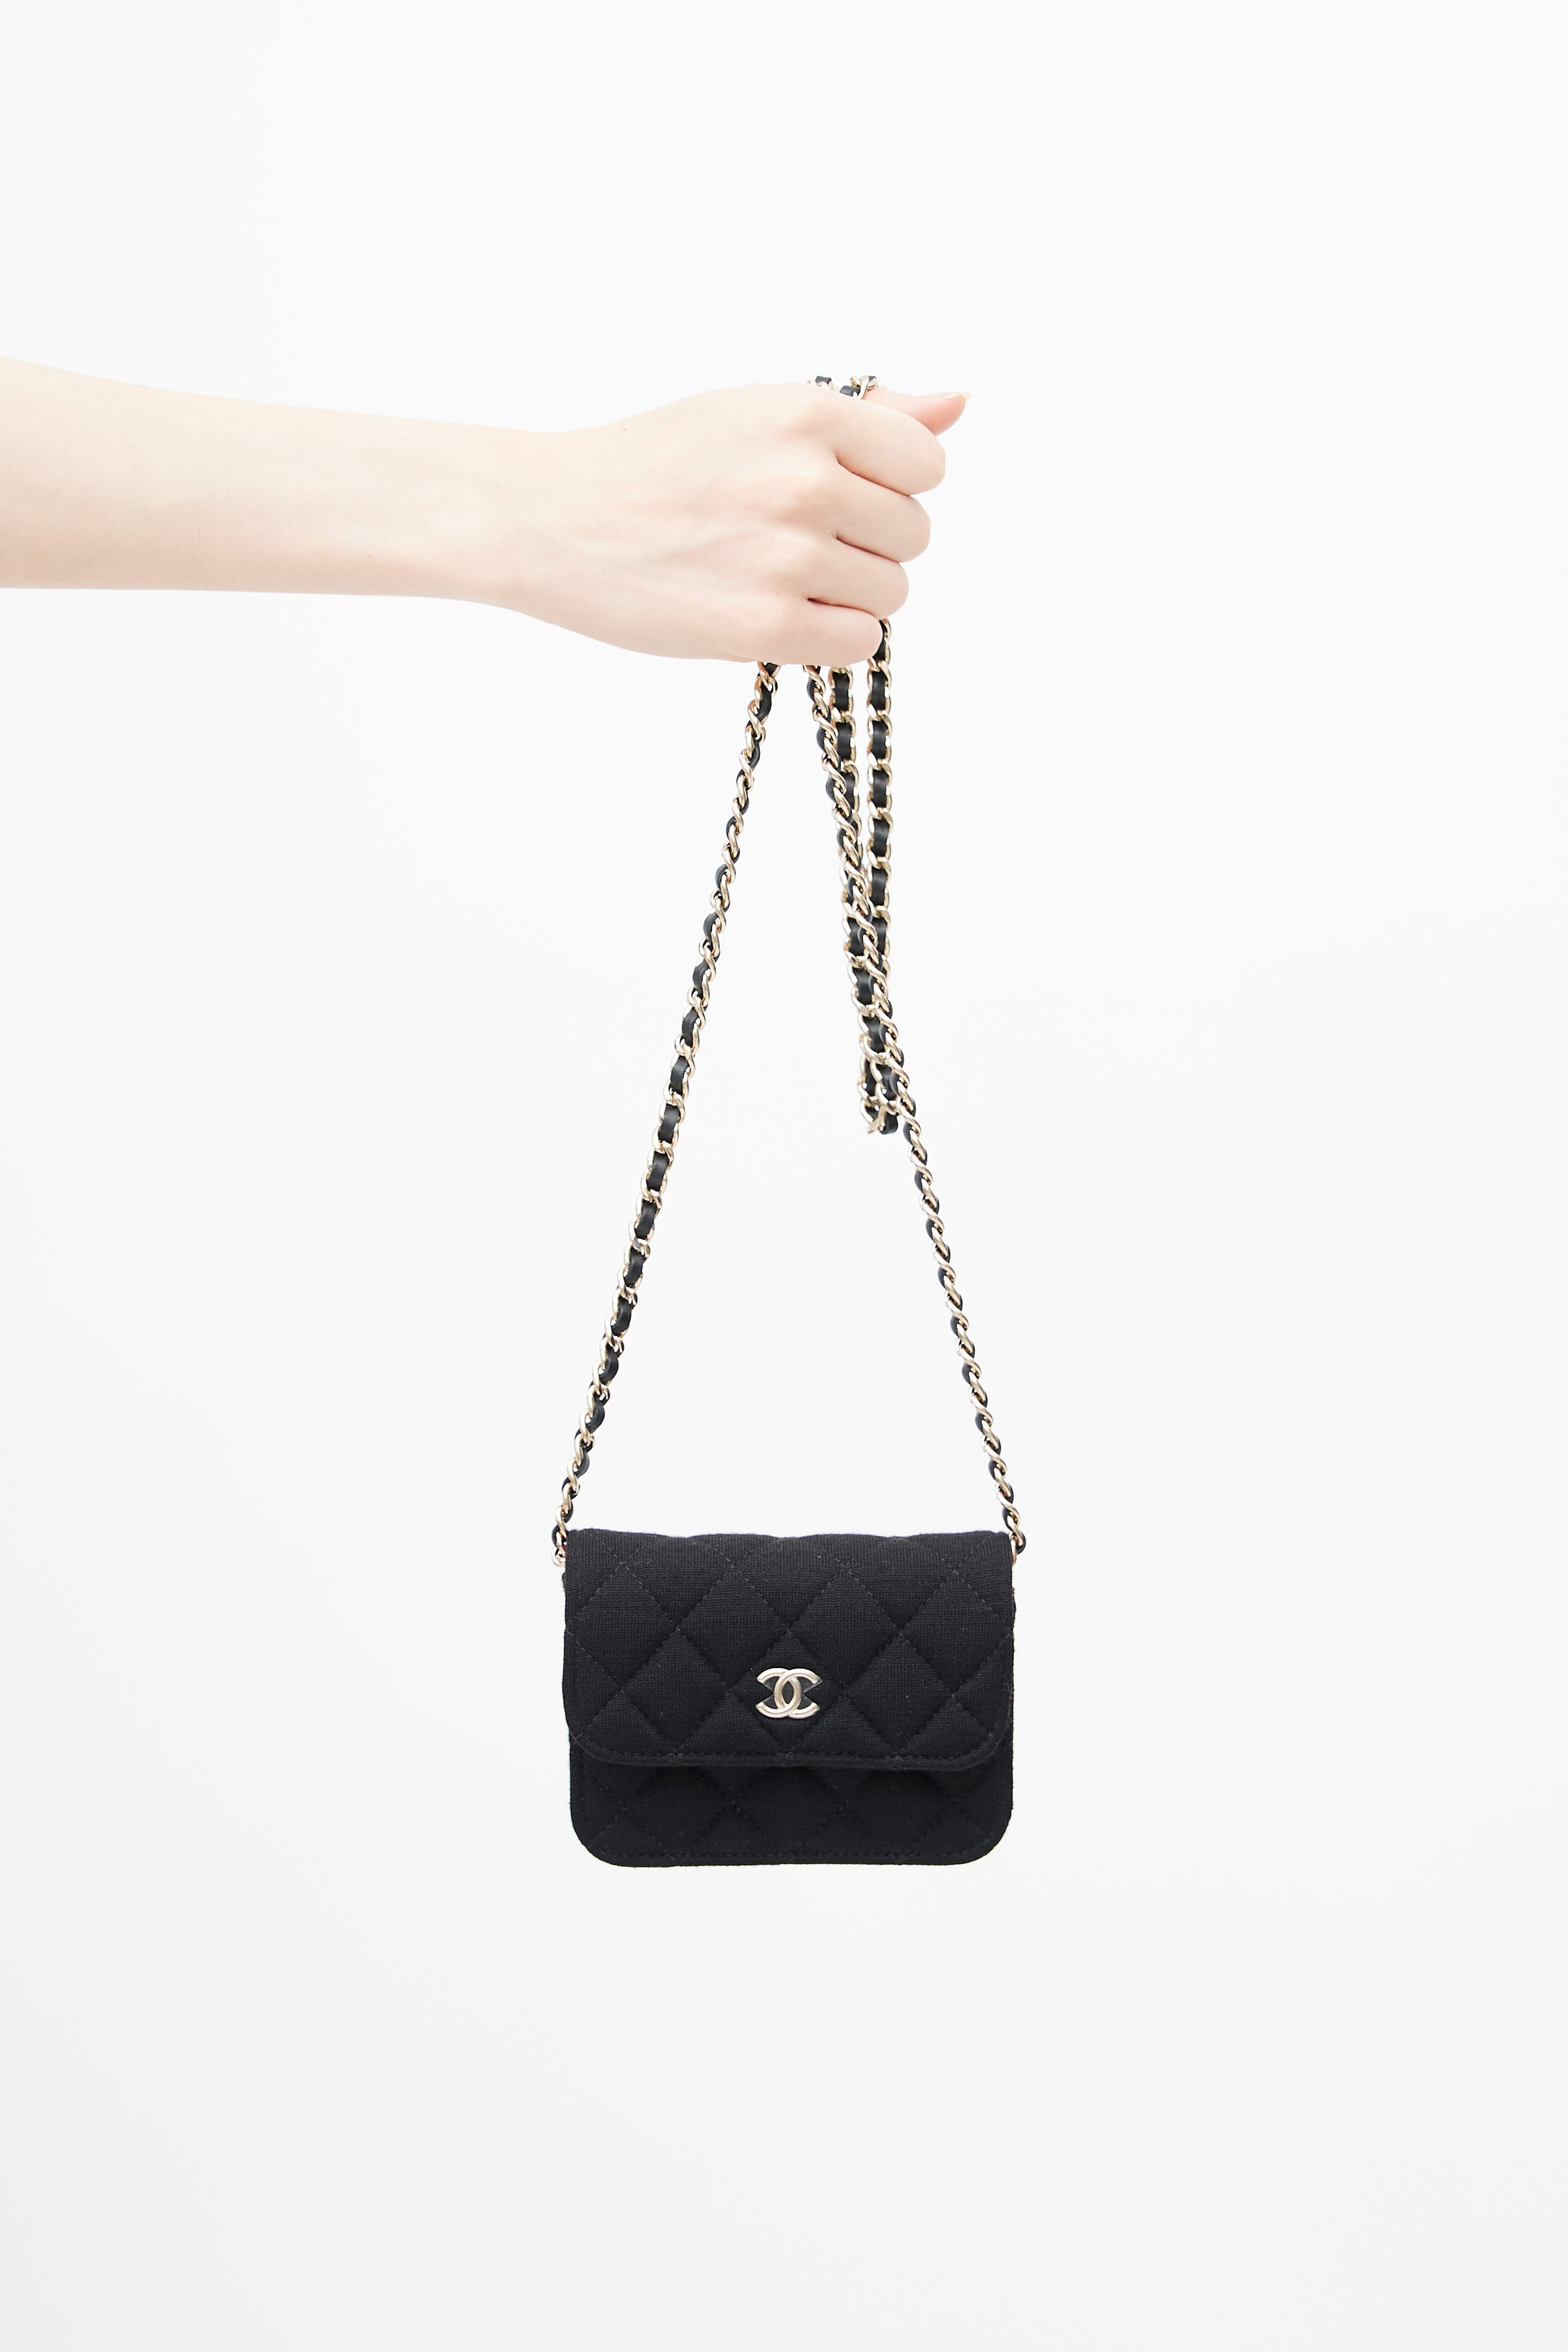 chanel square flap bag black